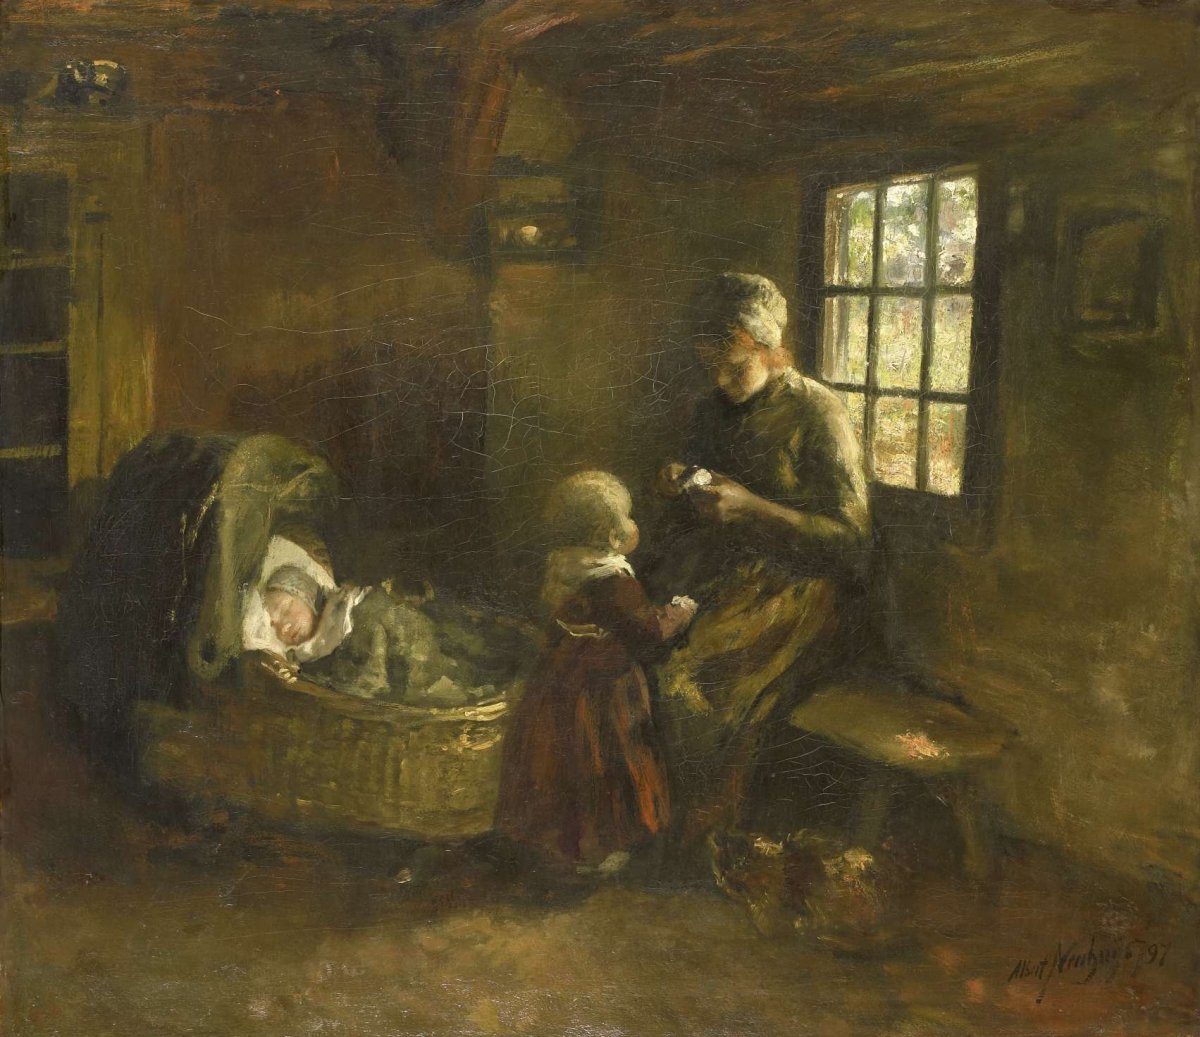 'At the Cradle', Albert Neuhuys (1844-1914), 1897